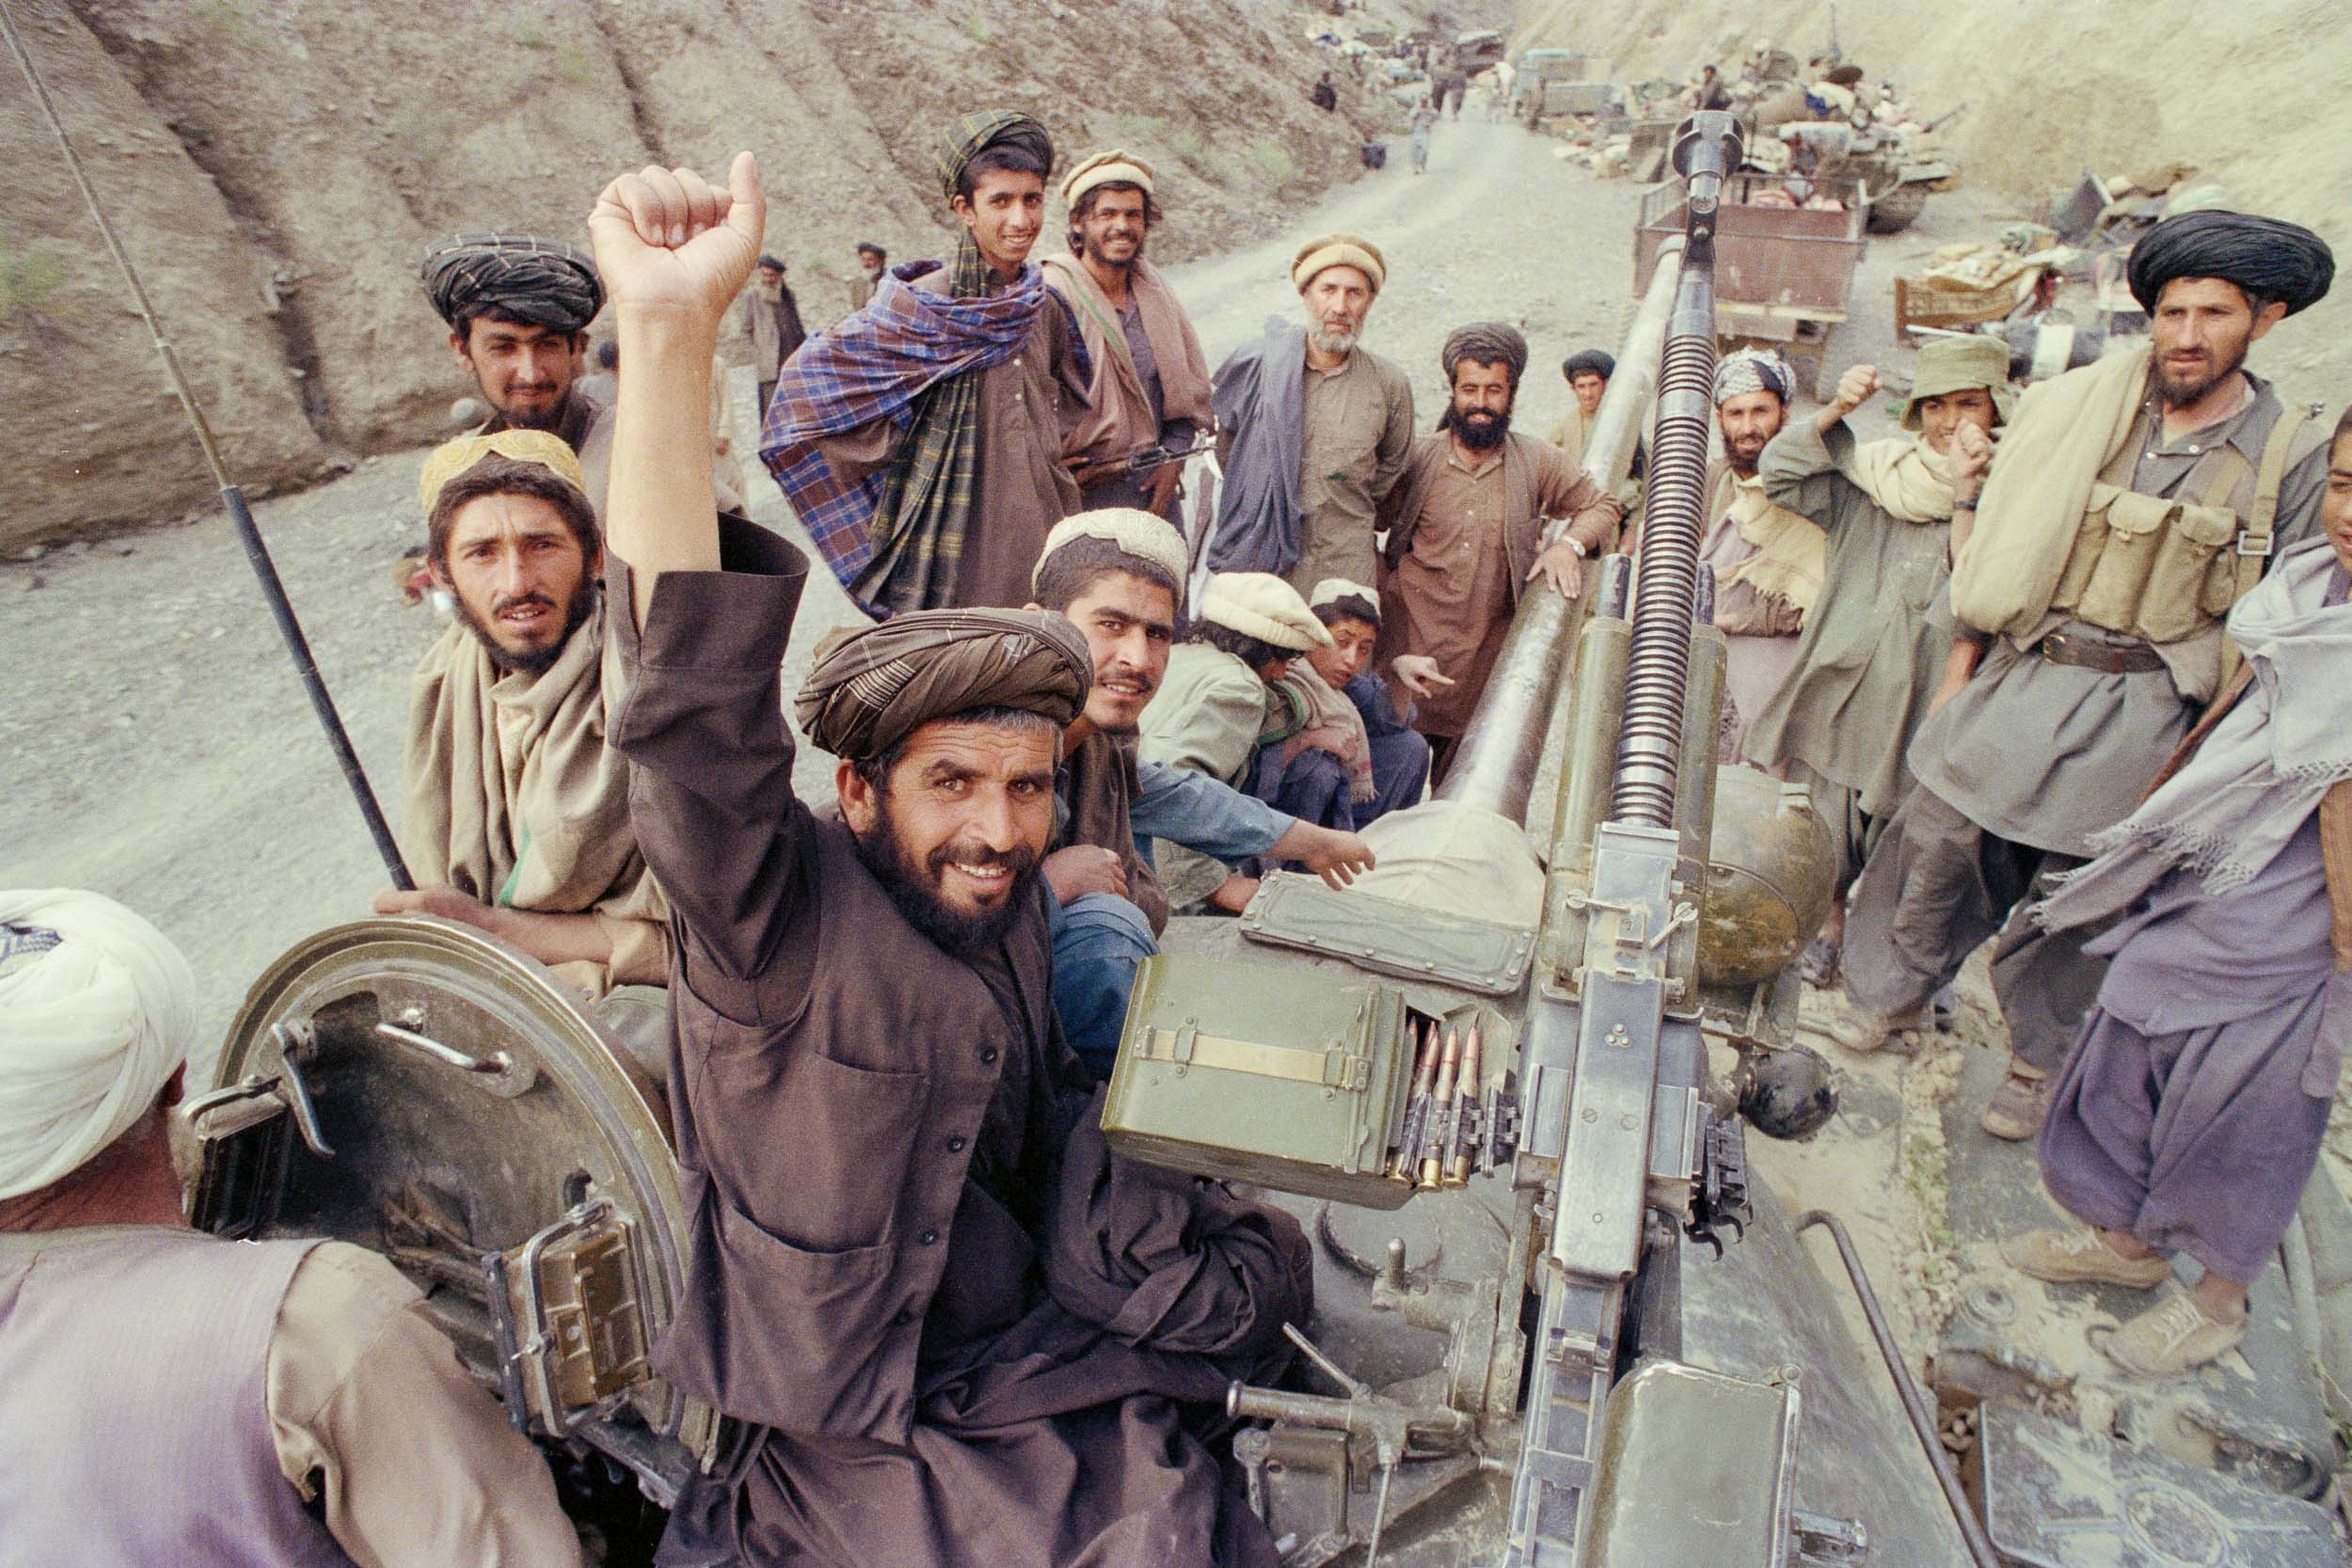 Mujahideen celebrate surrendered military equipment in a gorge,  Afghanistan 1988